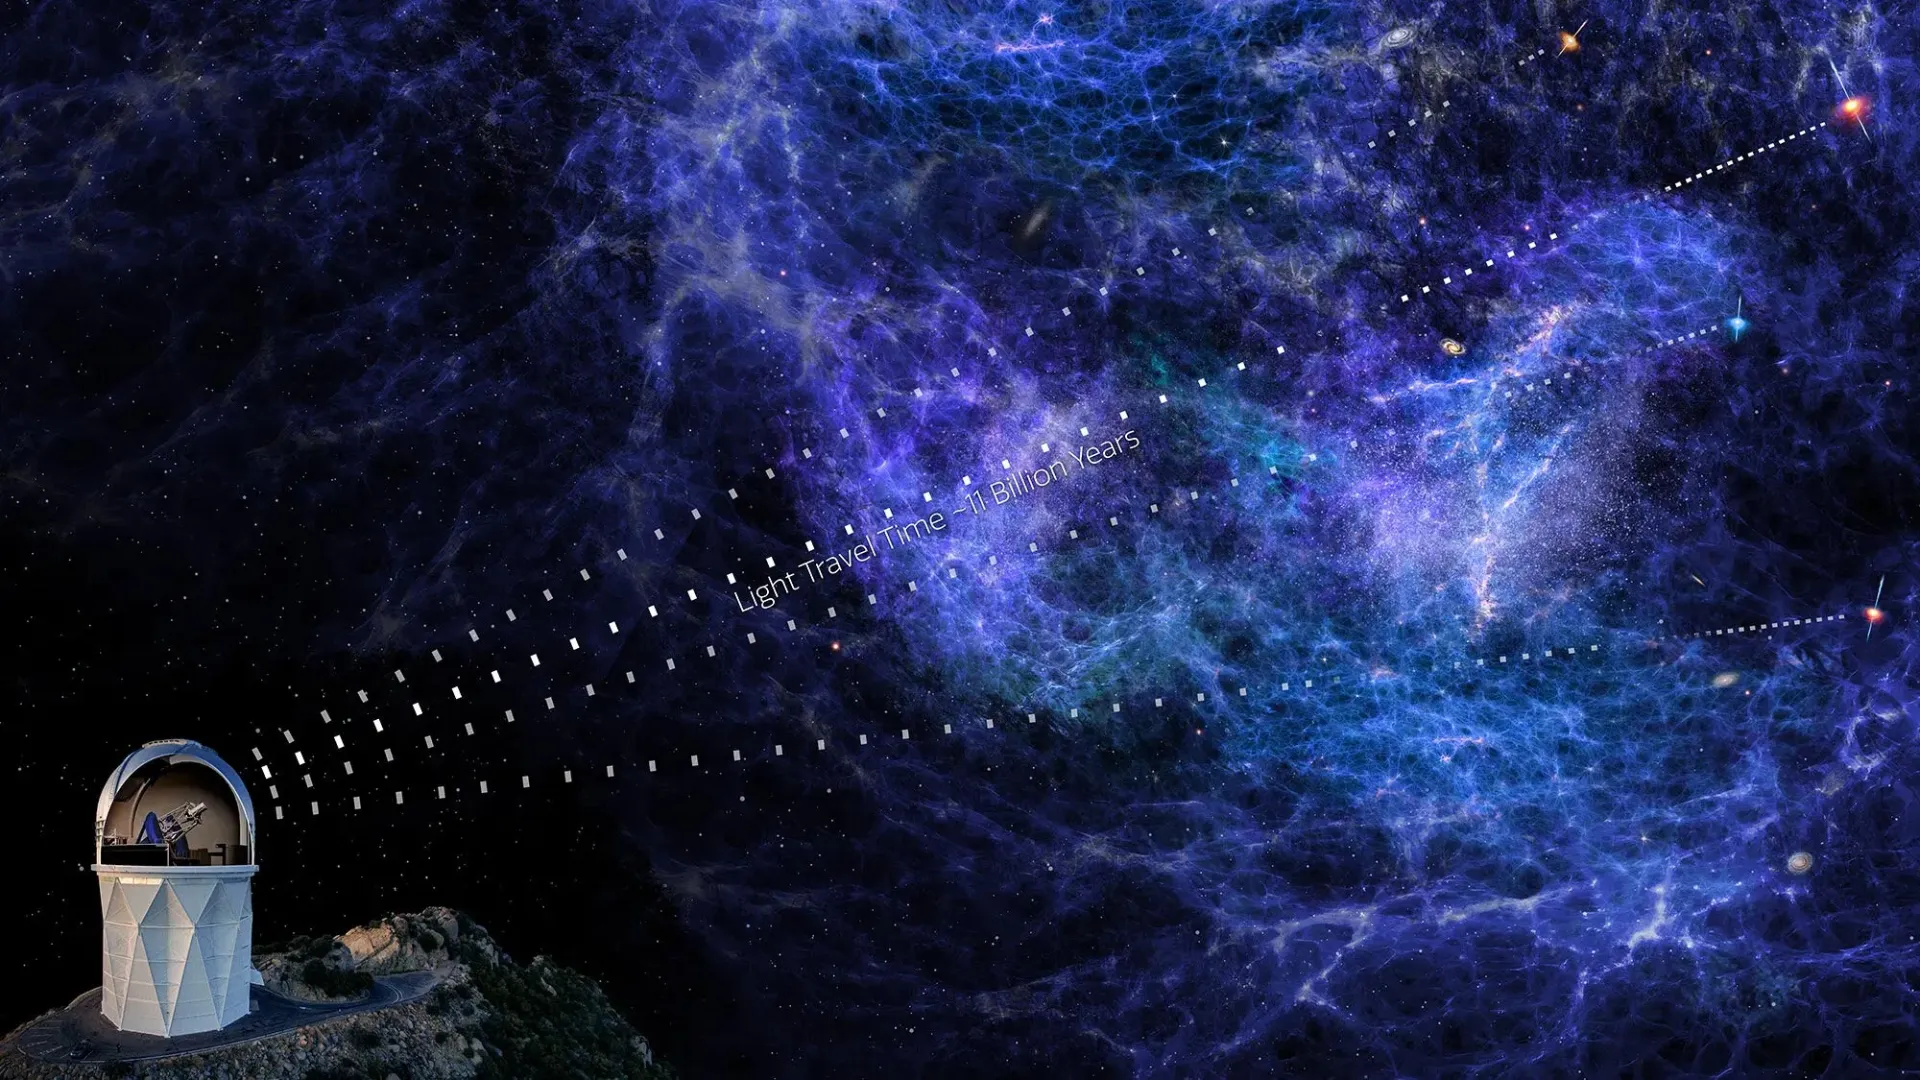 Imaging the passage of quasar light through intergalactic clouds